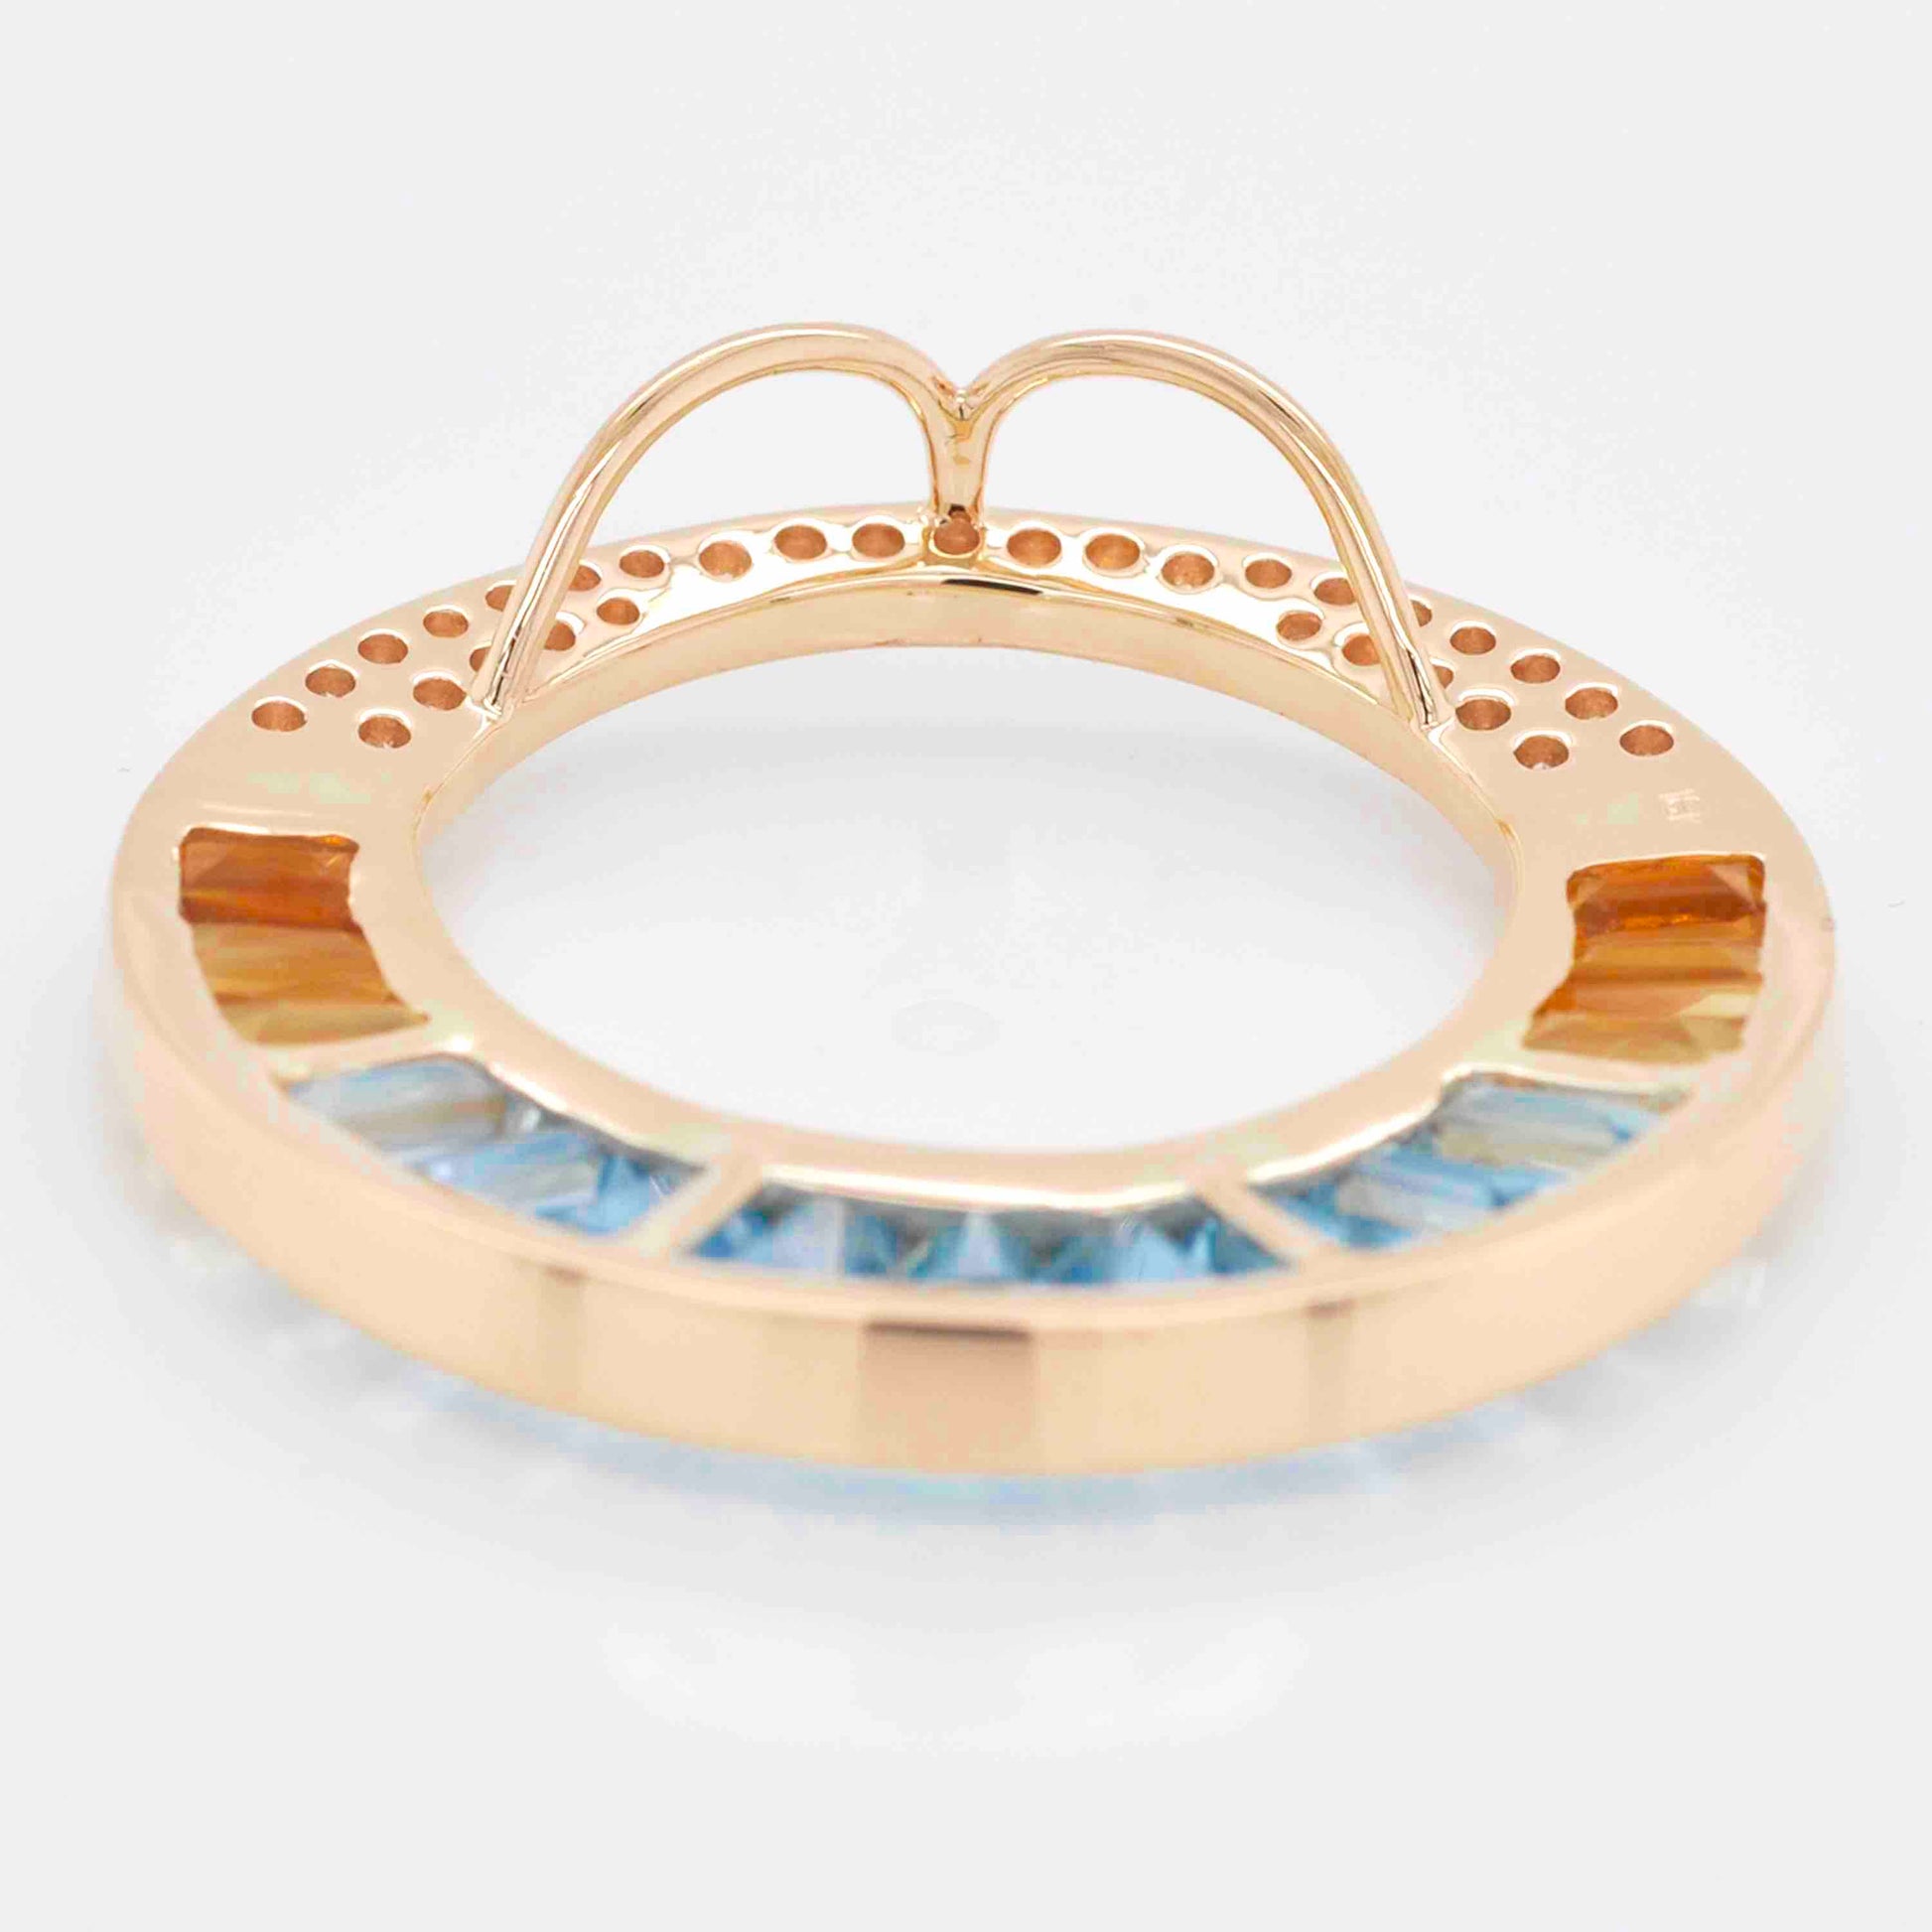 18K Gold Blue Topaz Citrine Cleopatra Diamond Pendant Necklace - Vaibhav Dhadda Jewelry